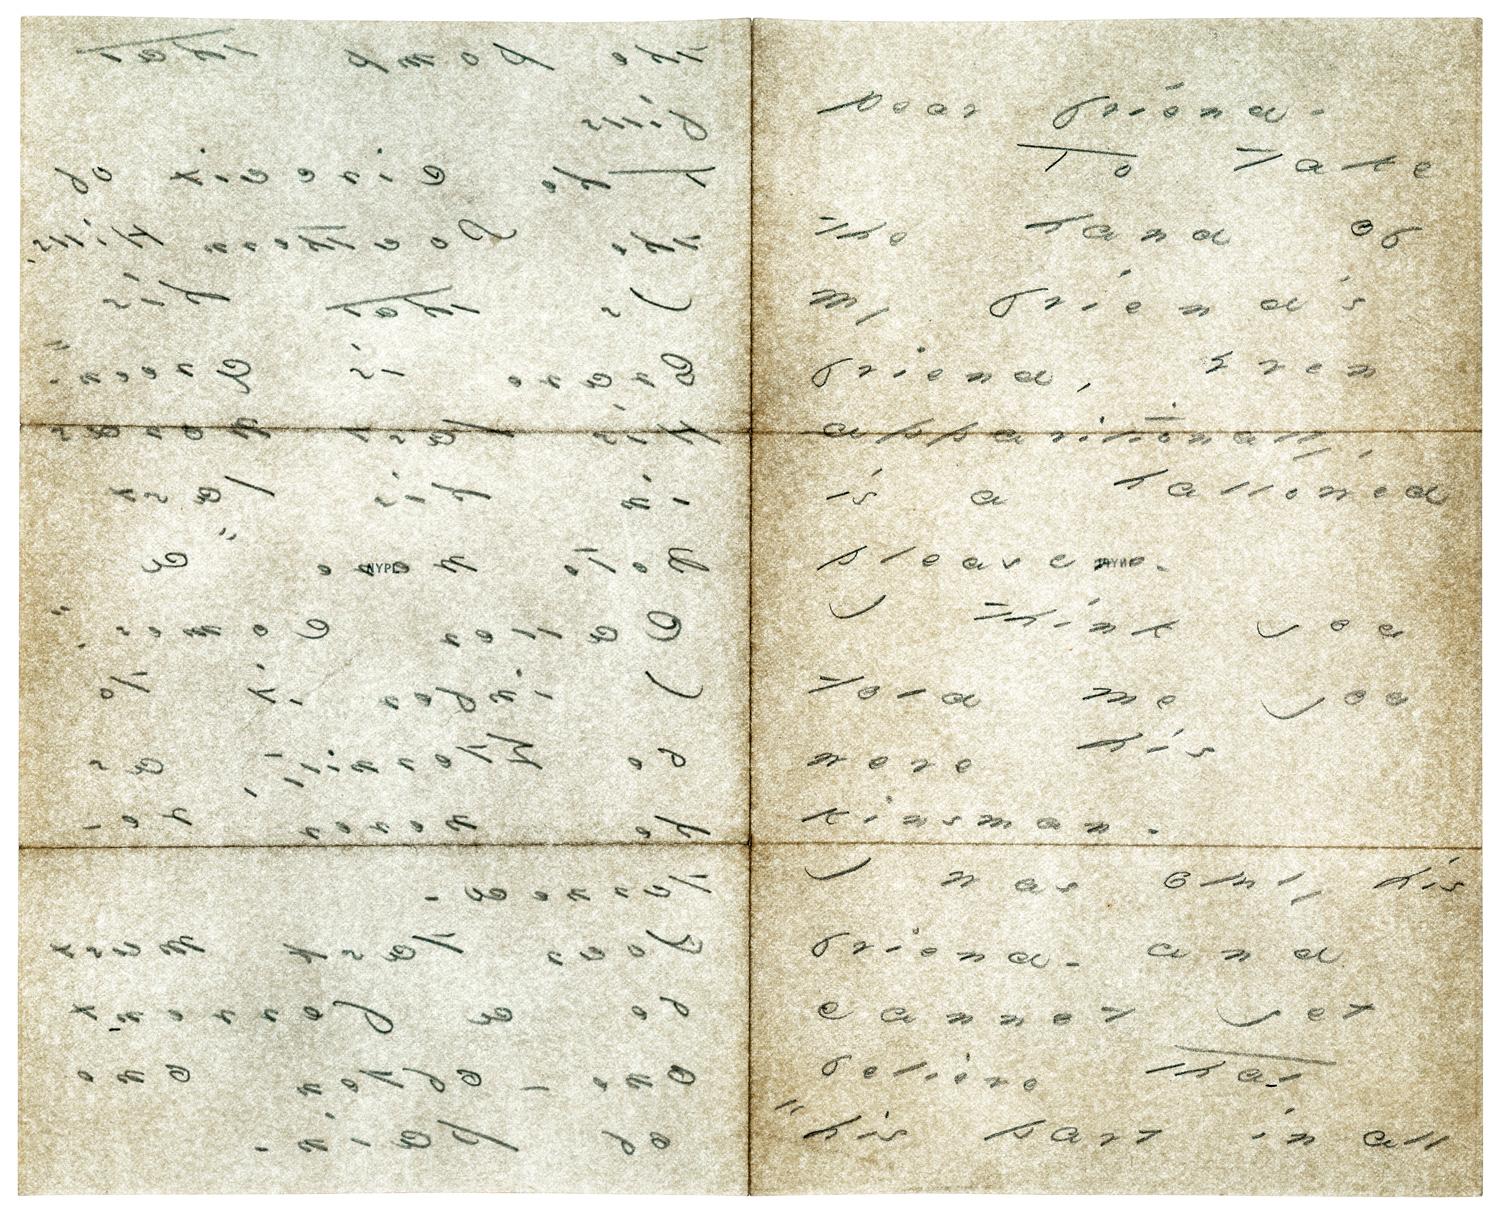 "Emily Dickinson": Still Life Scanograph Photograph of Hand Written Letter